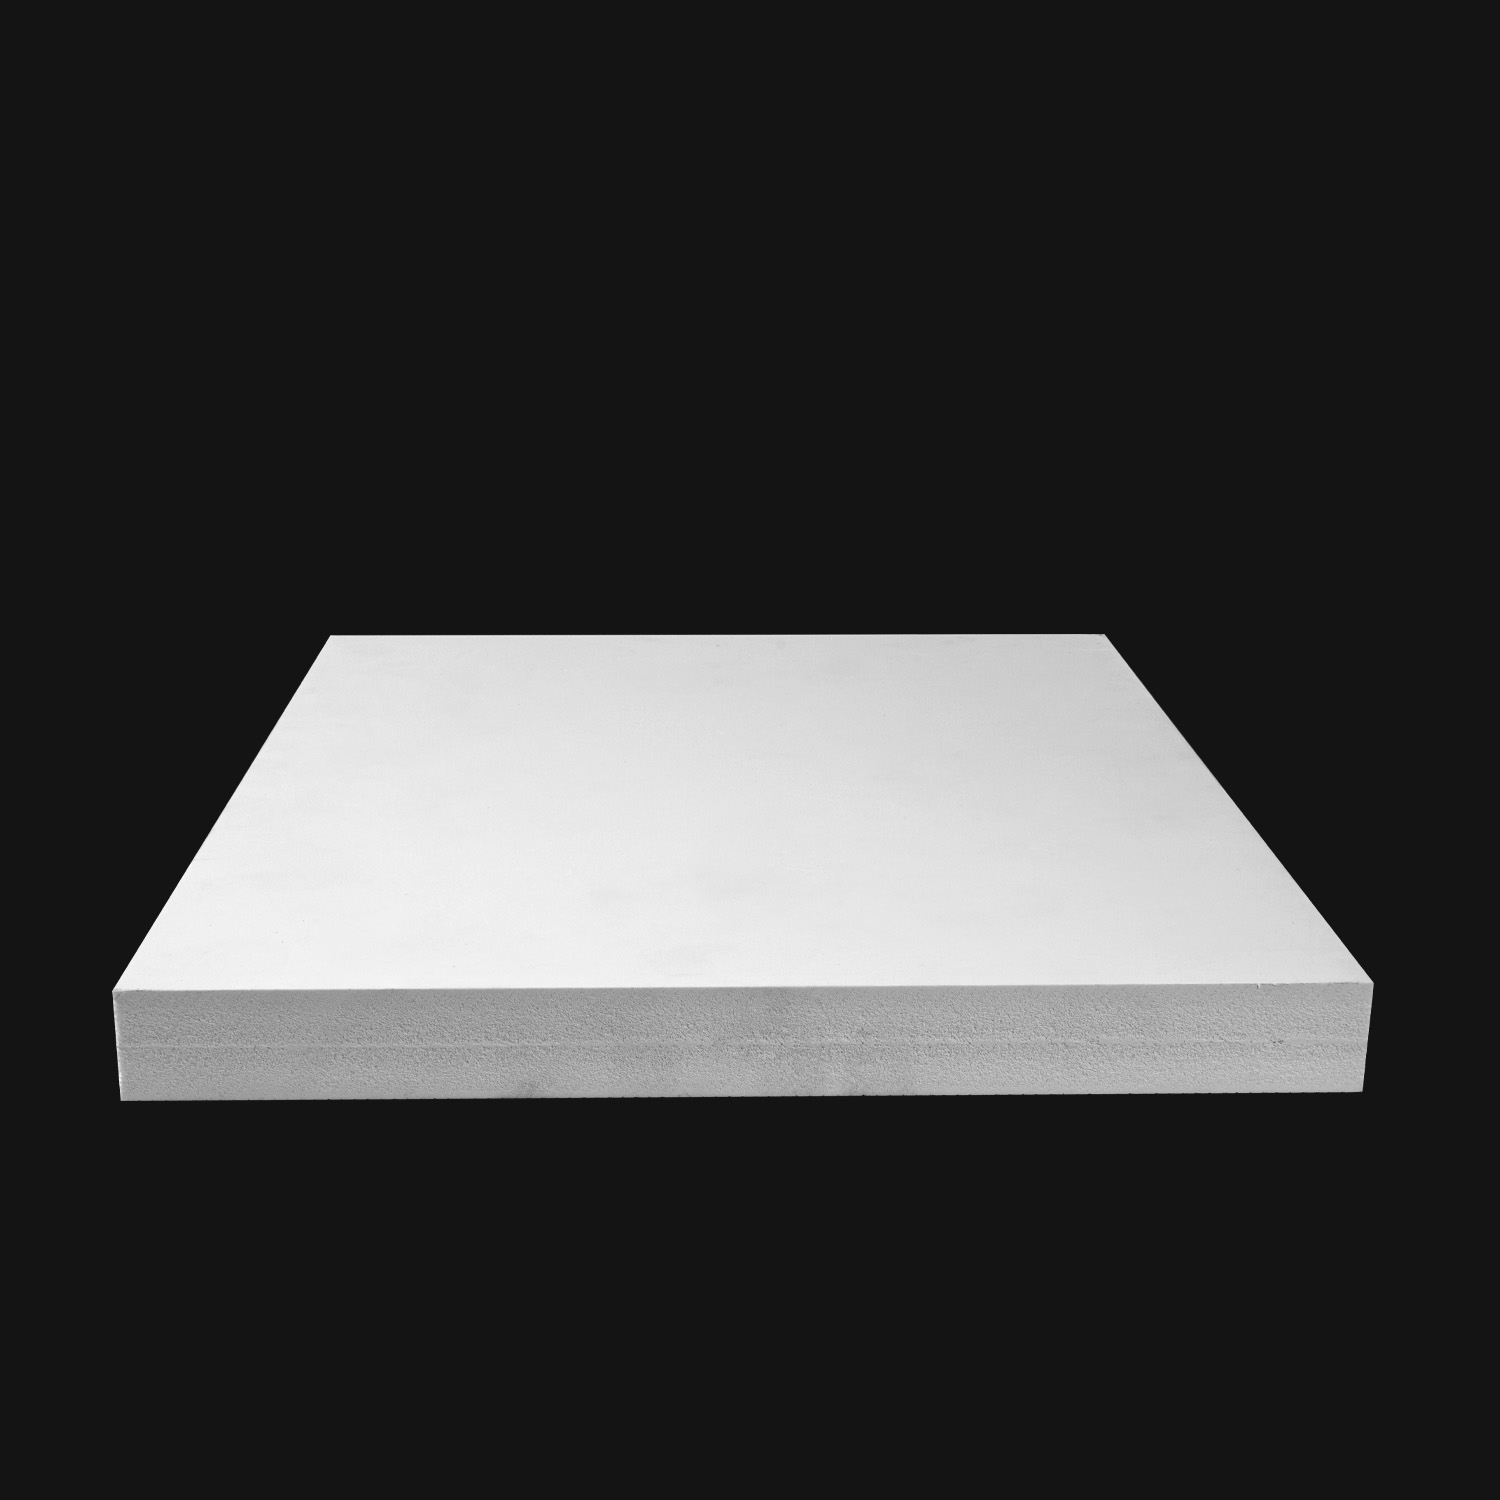 High Quality Waterproof PVC Foam Boards With Film